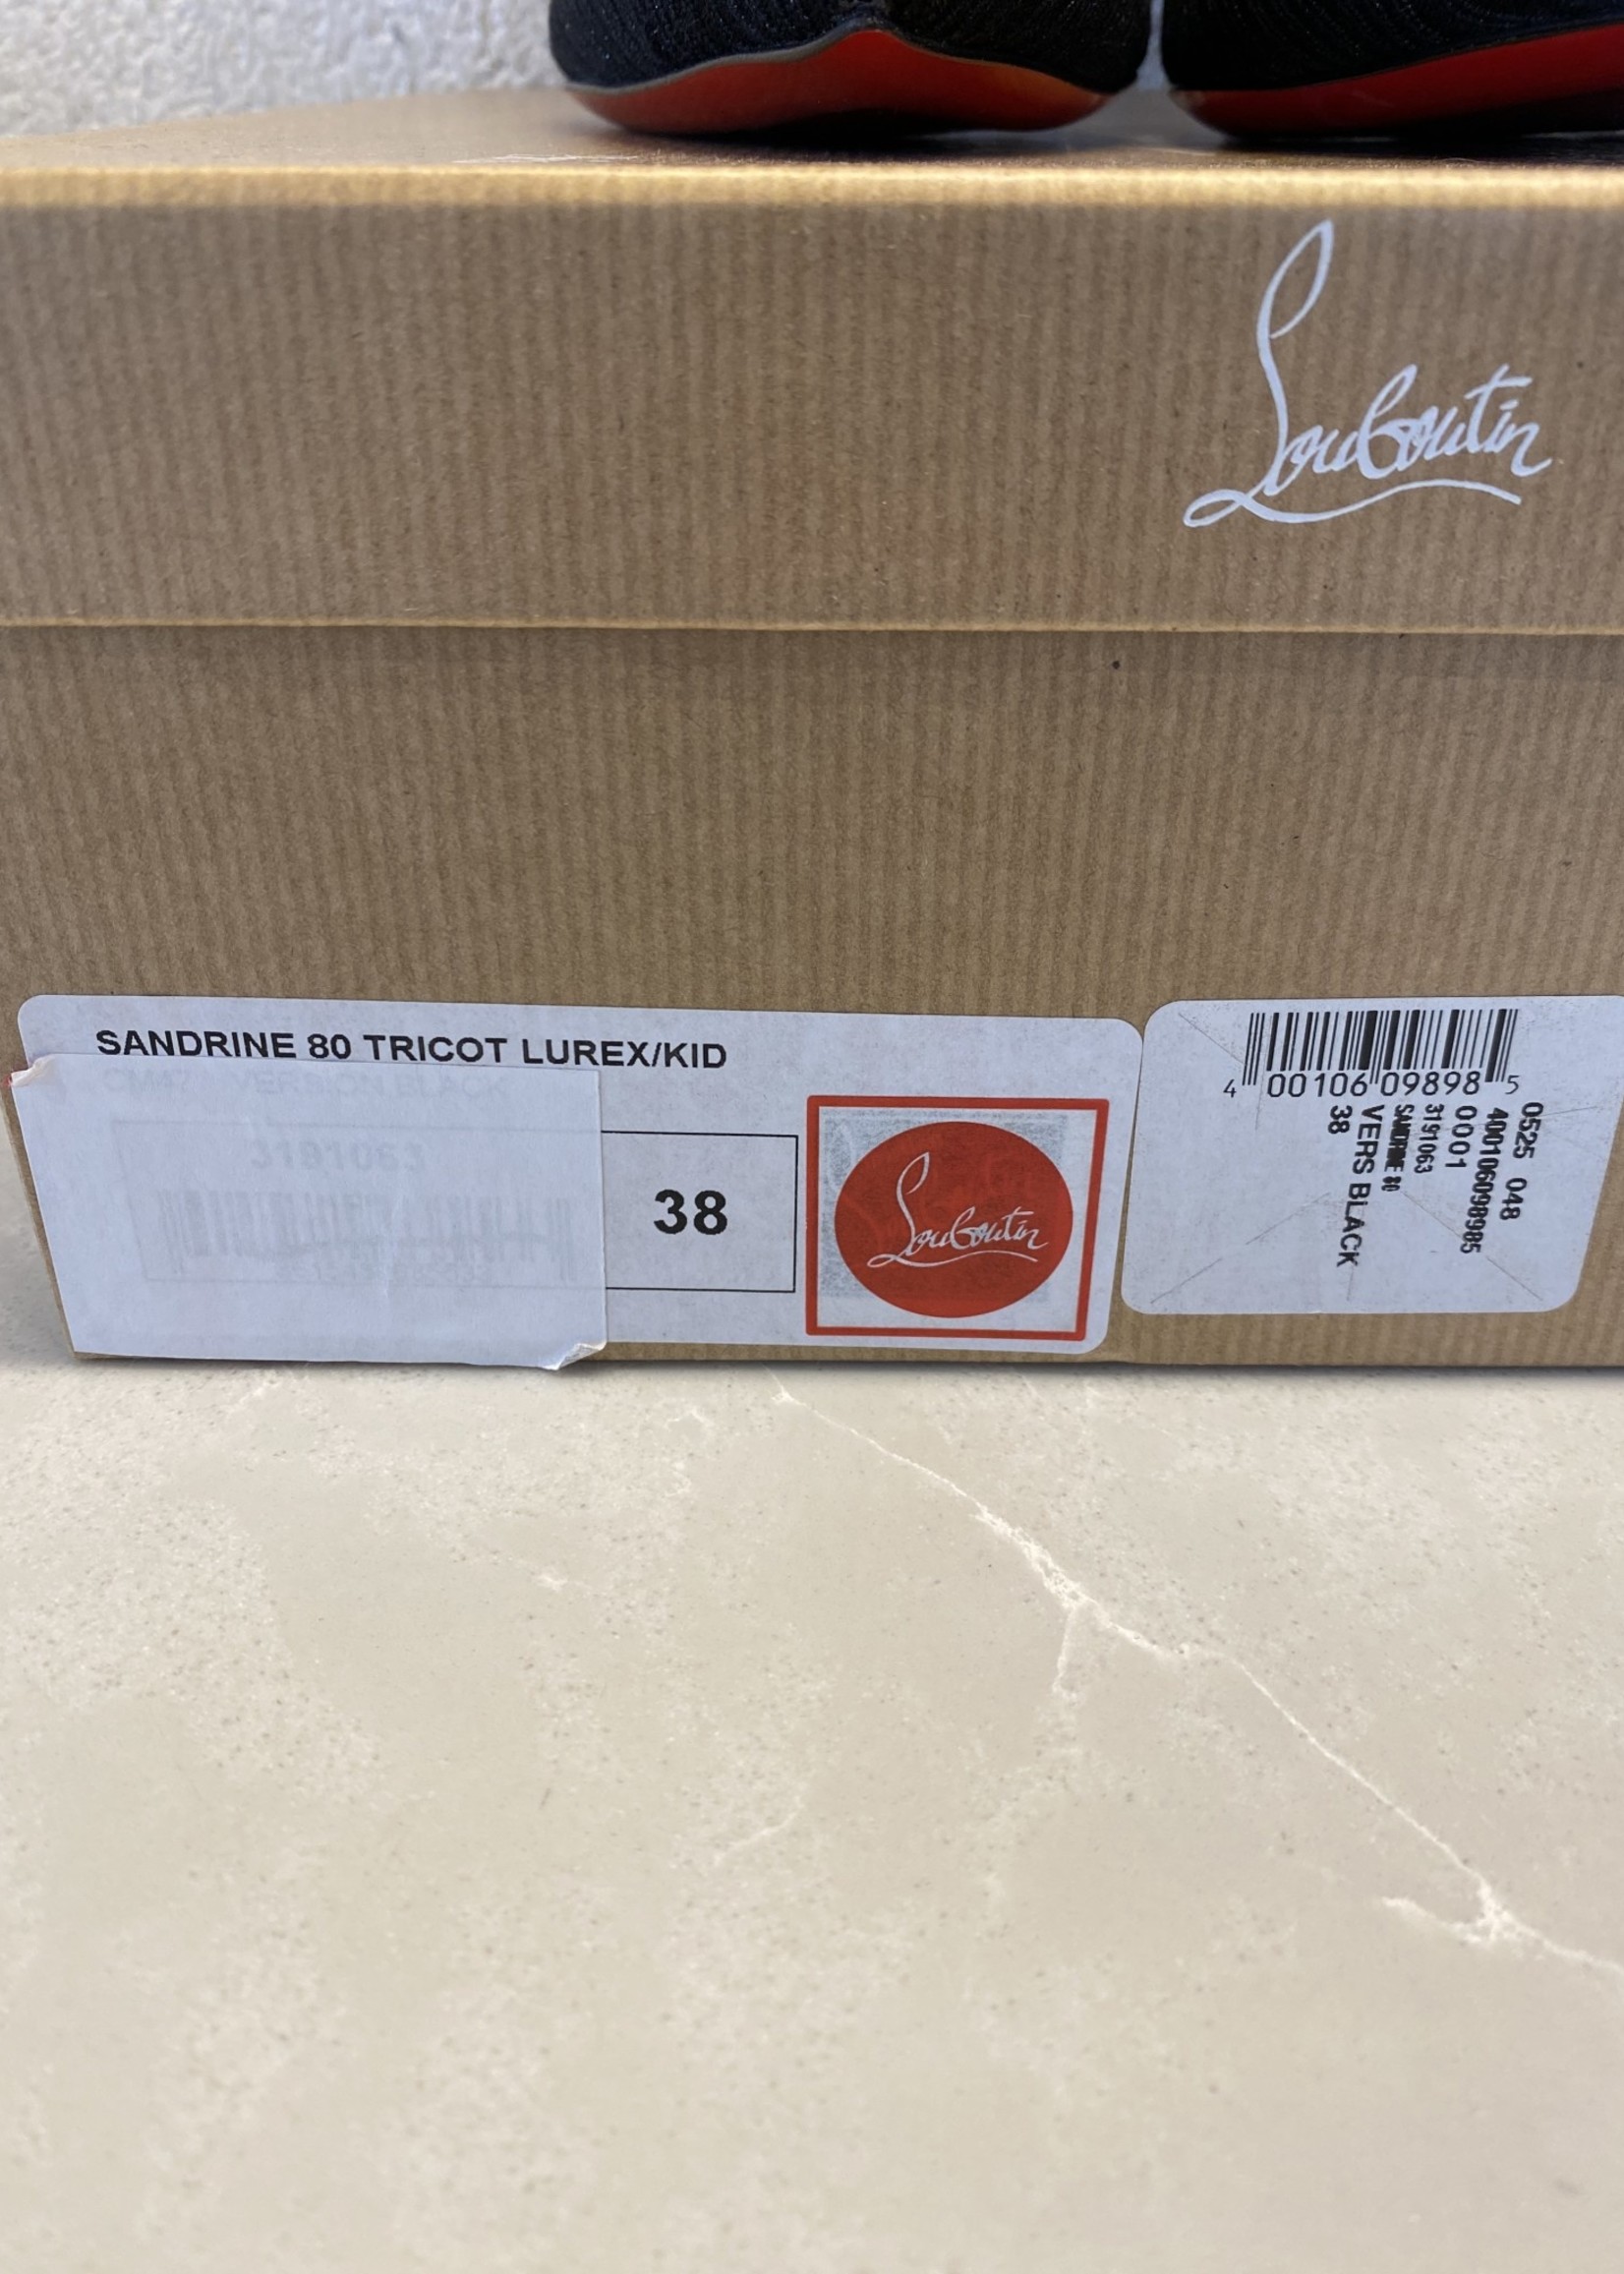 Christian Louboutin 'Sandrine 80' Sock Boot (Retail: $1095) 38